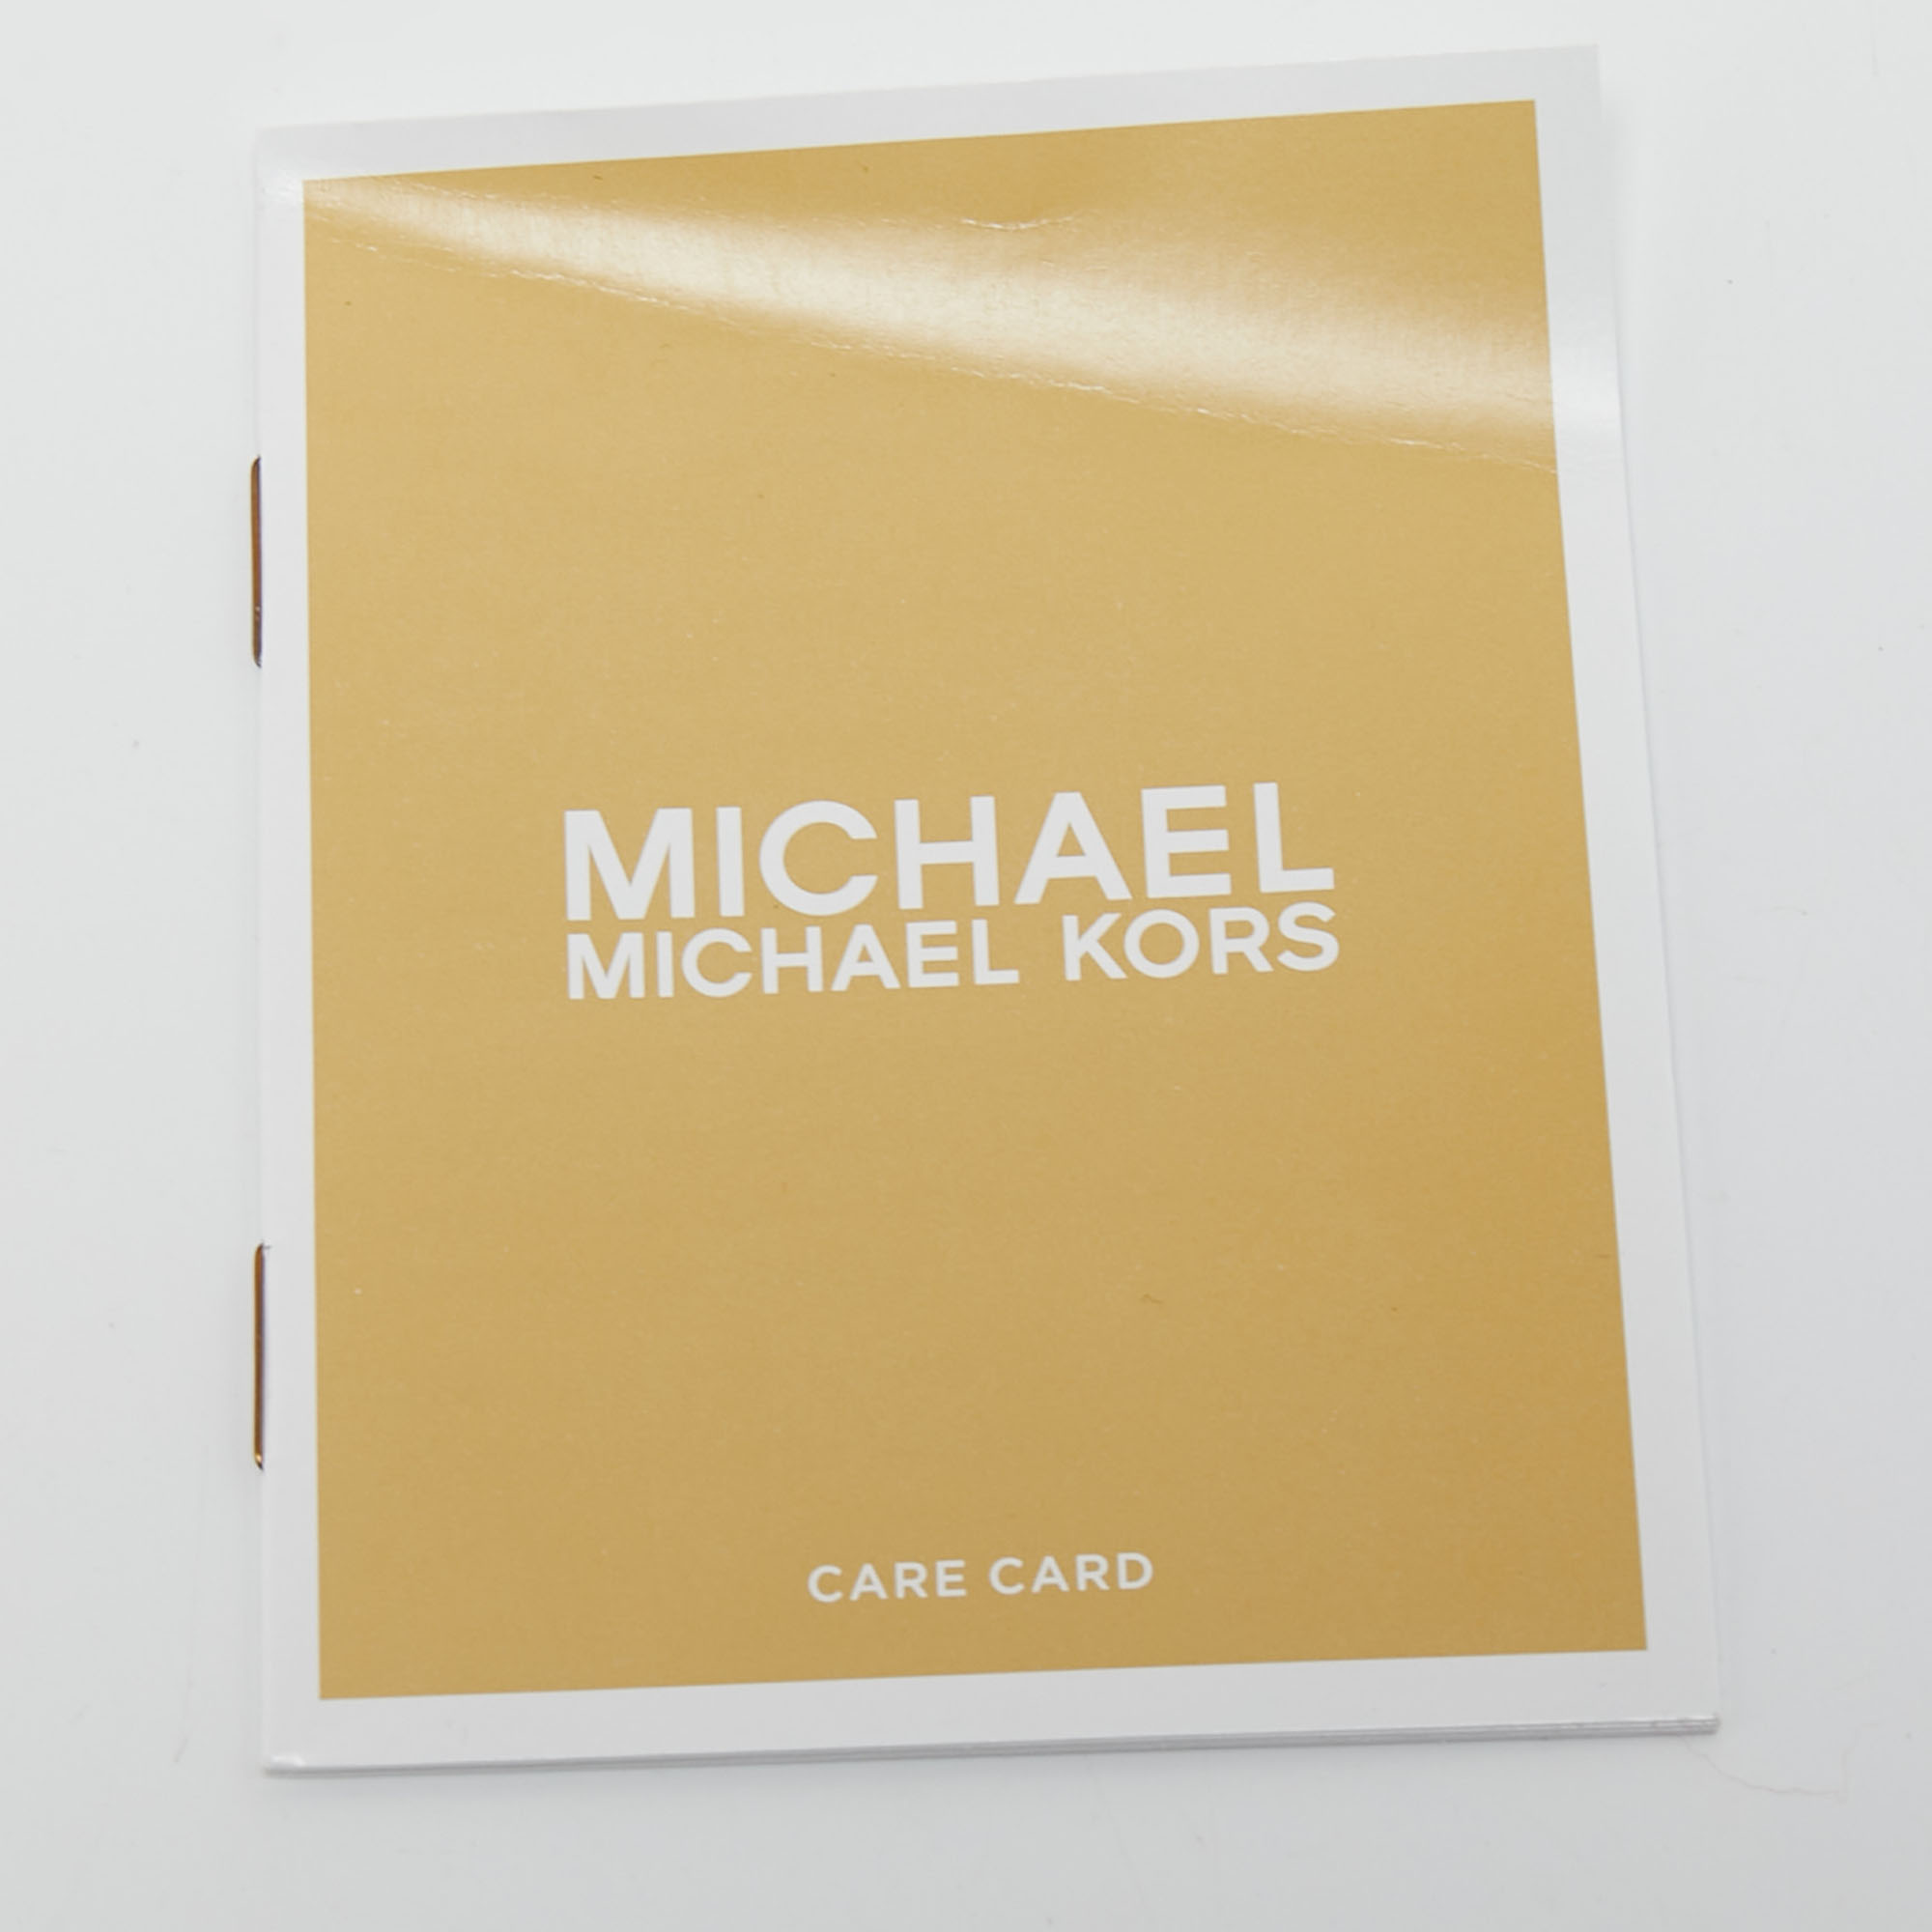 Michael Kors Burgundy Leather Small Carmen Phone Crossbody Bag